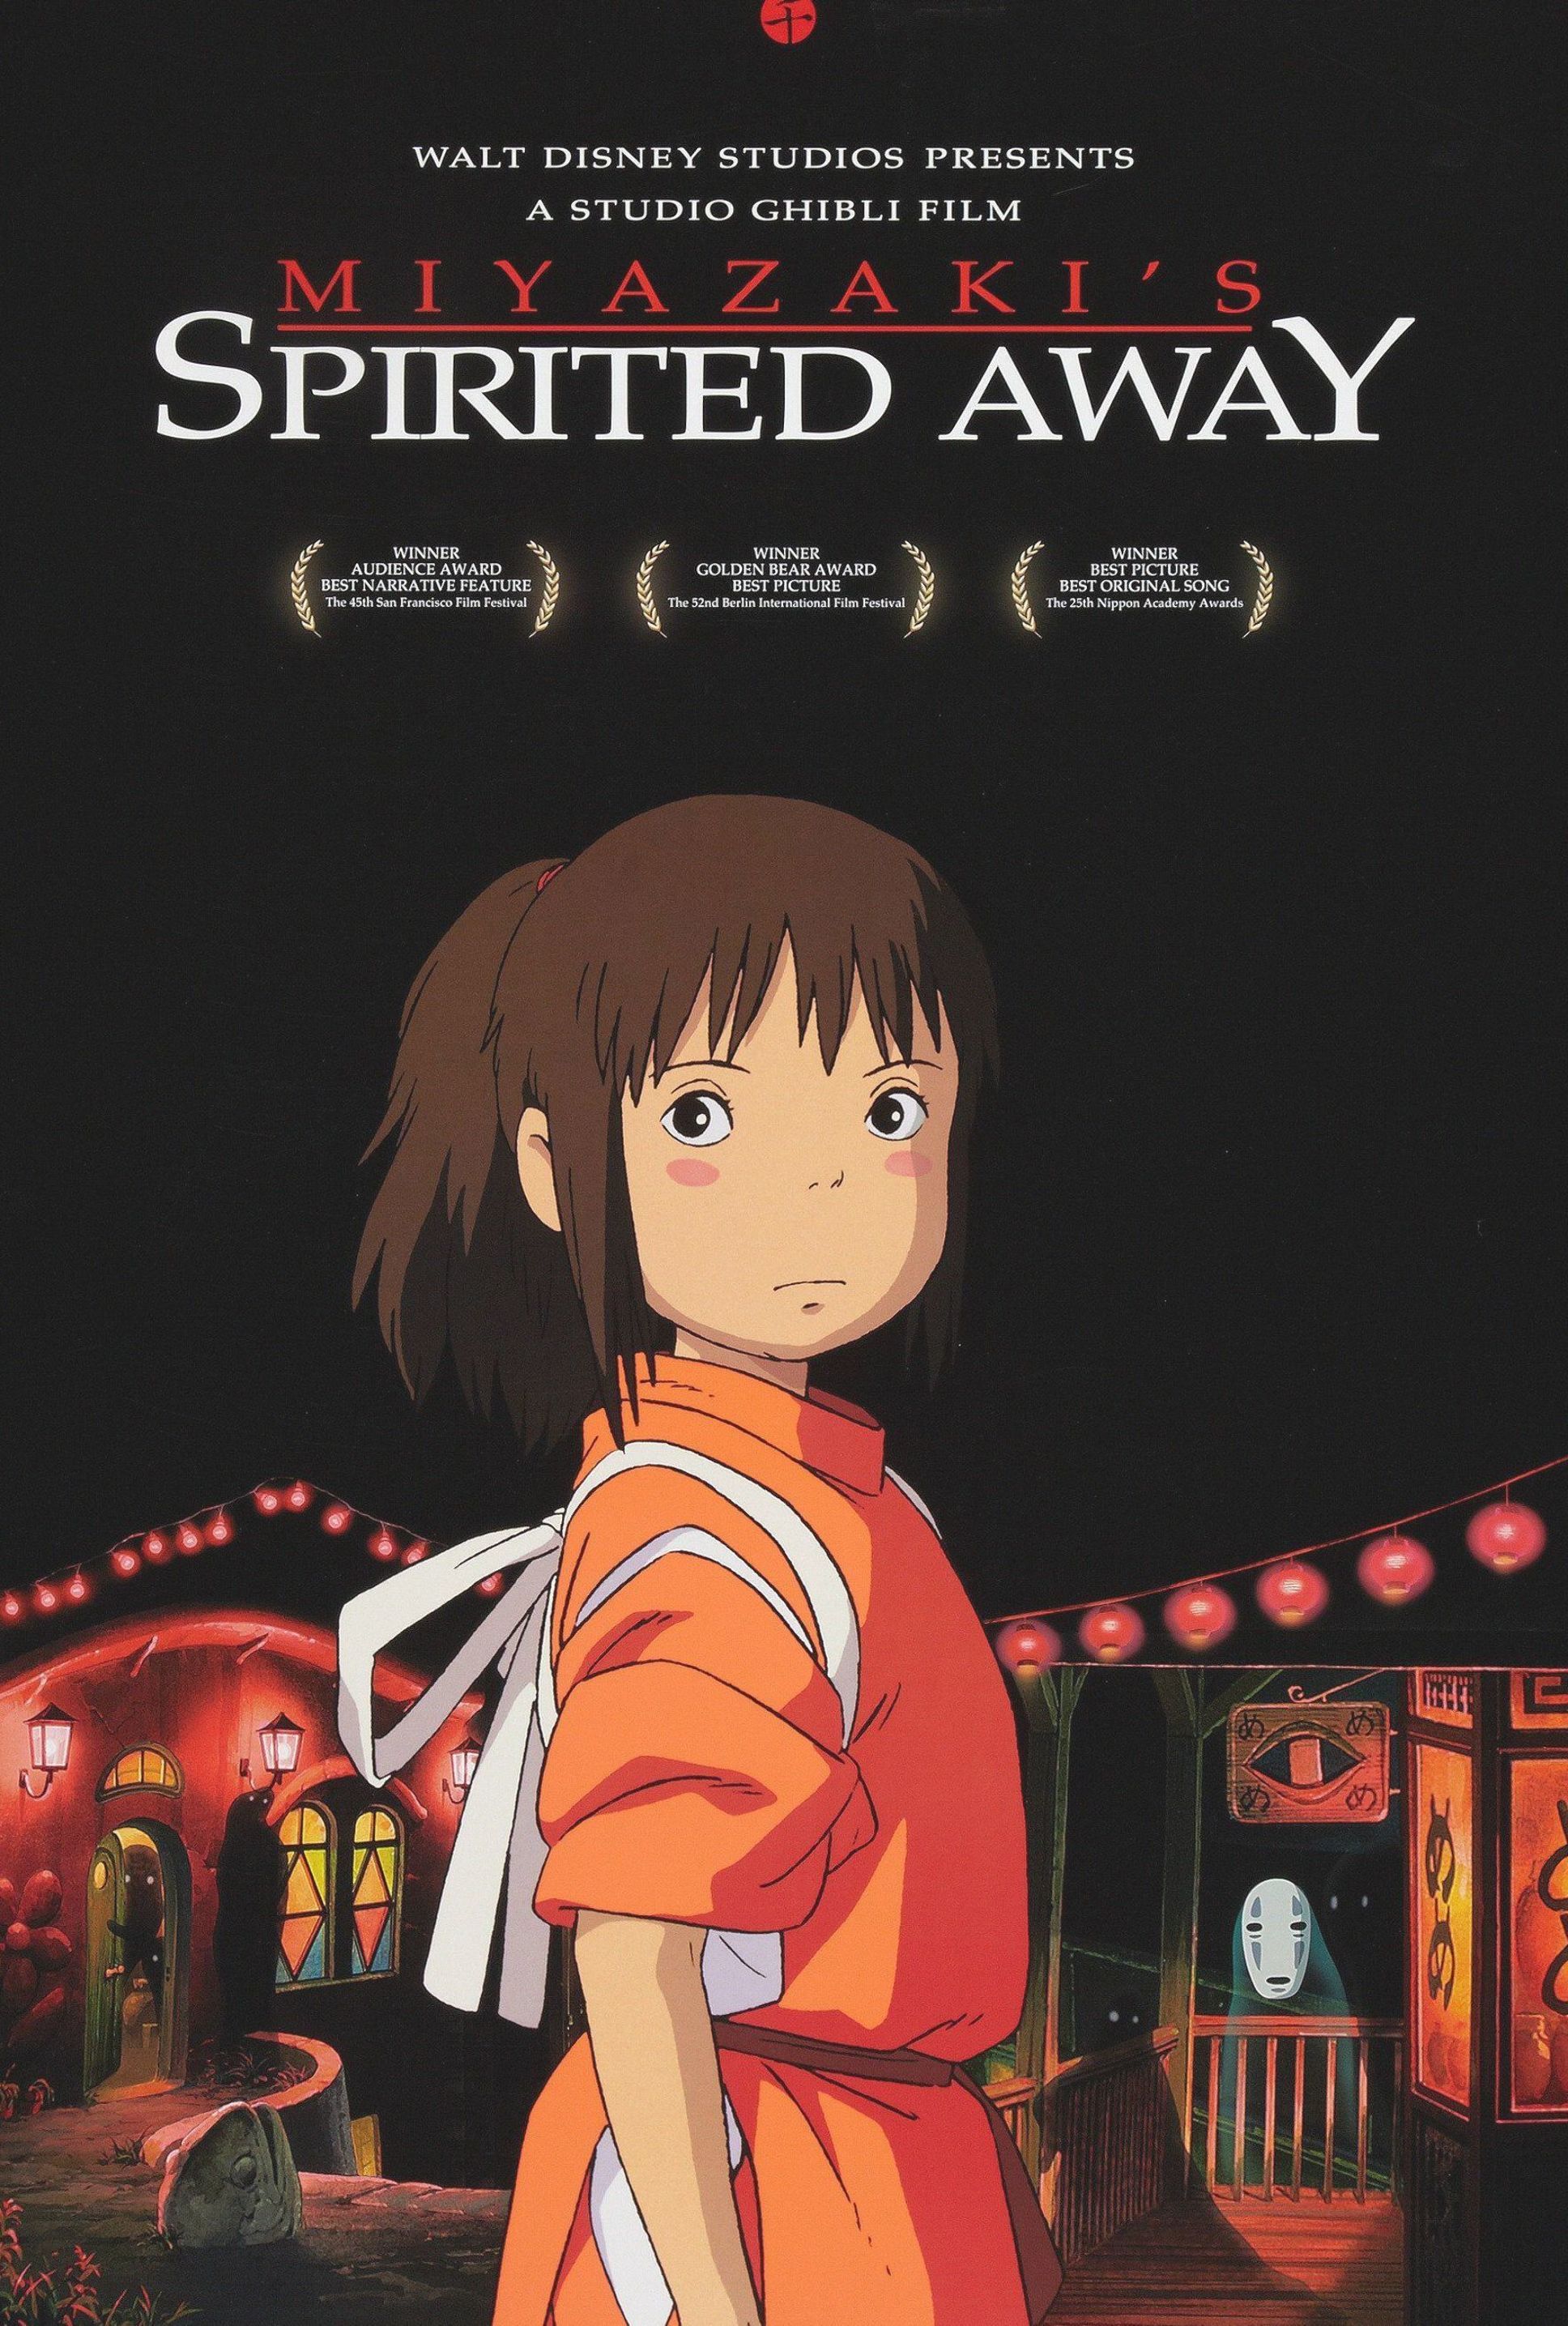 Studio Ghibli Spirited Away Animated Movie Poster DIGITAL DOWNLOAD. Animated movie posters, Studio ghibli poster, Studio ghibli spirited away